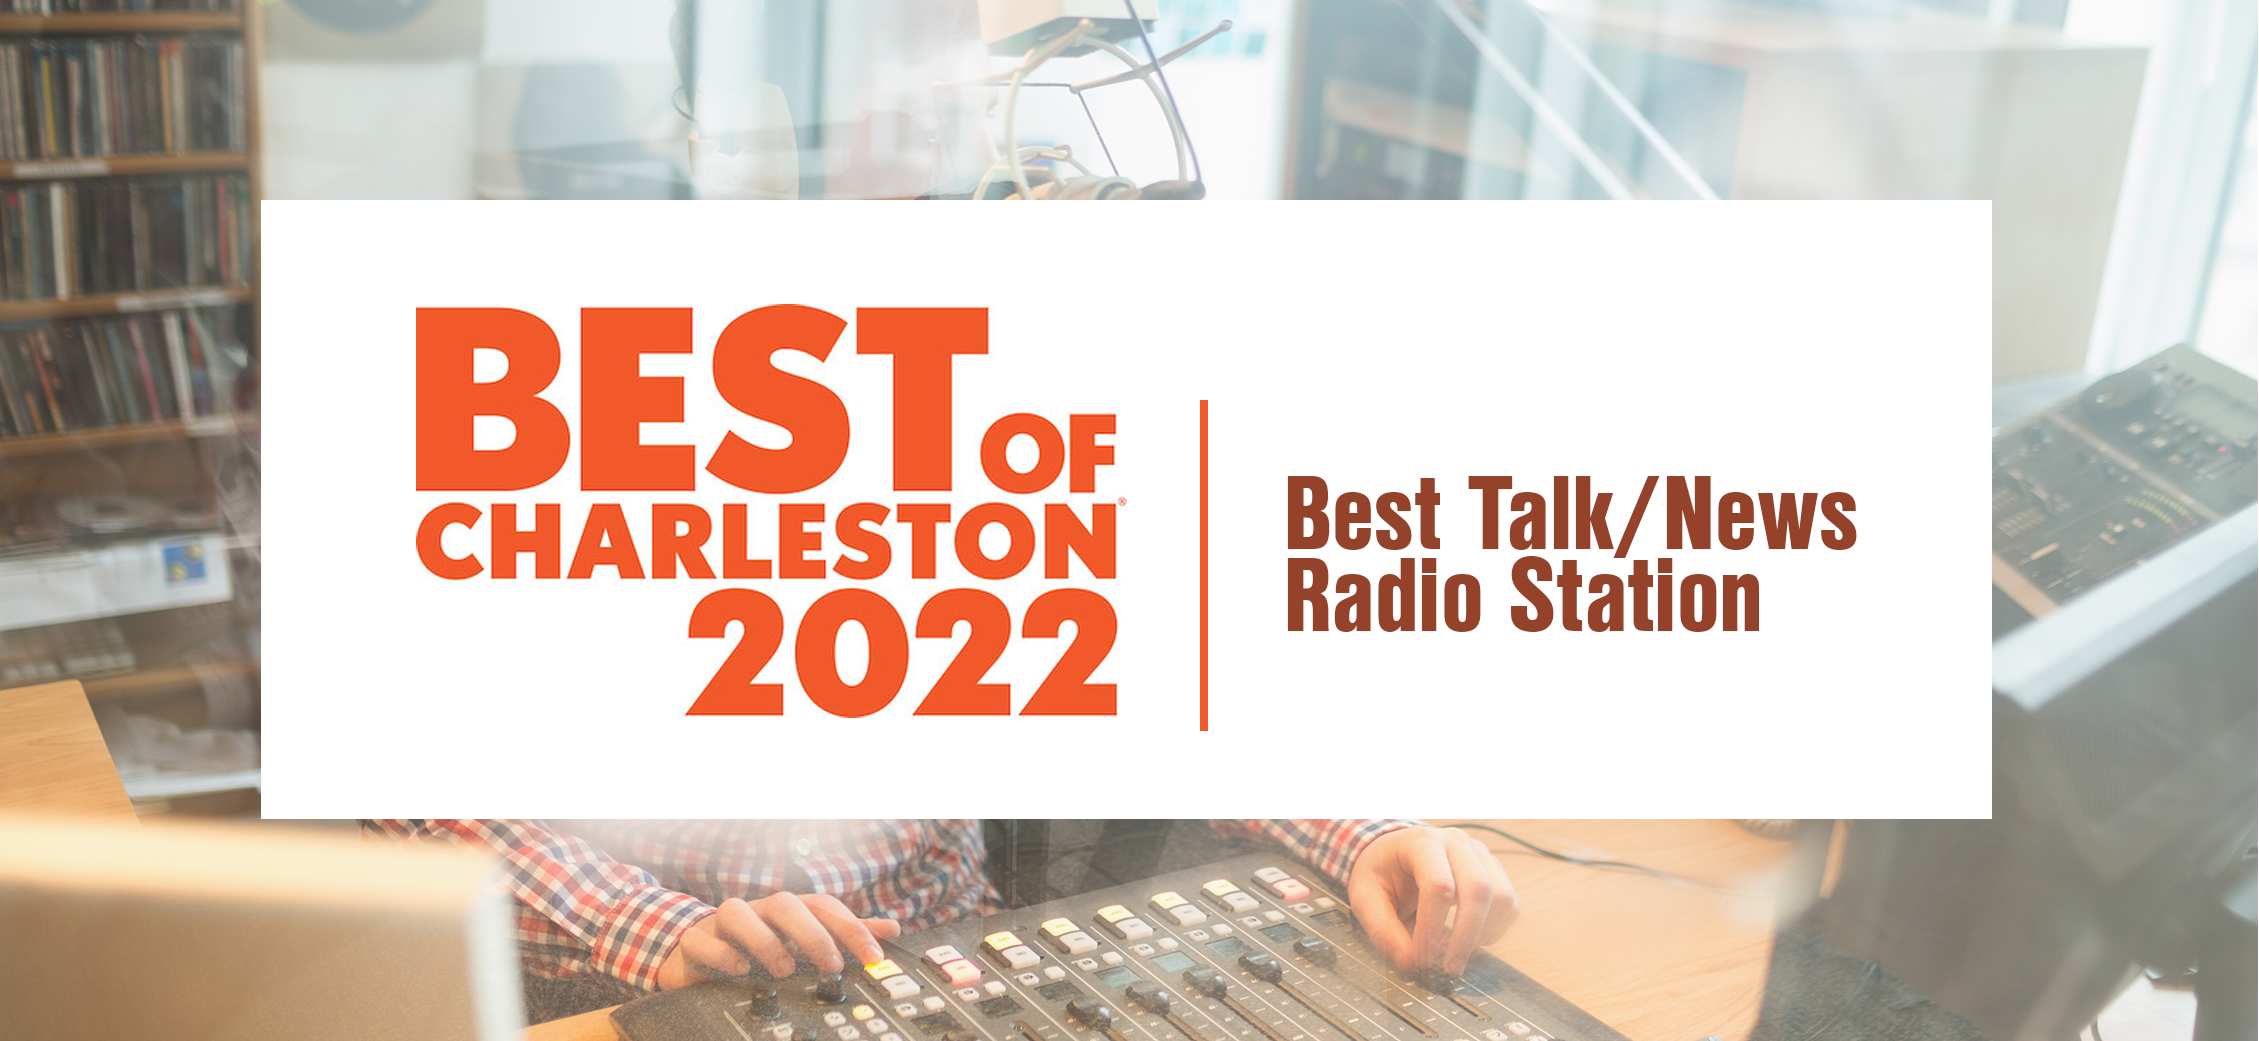 South Carolina Public Radio wins “Best of Charleston” Stories South